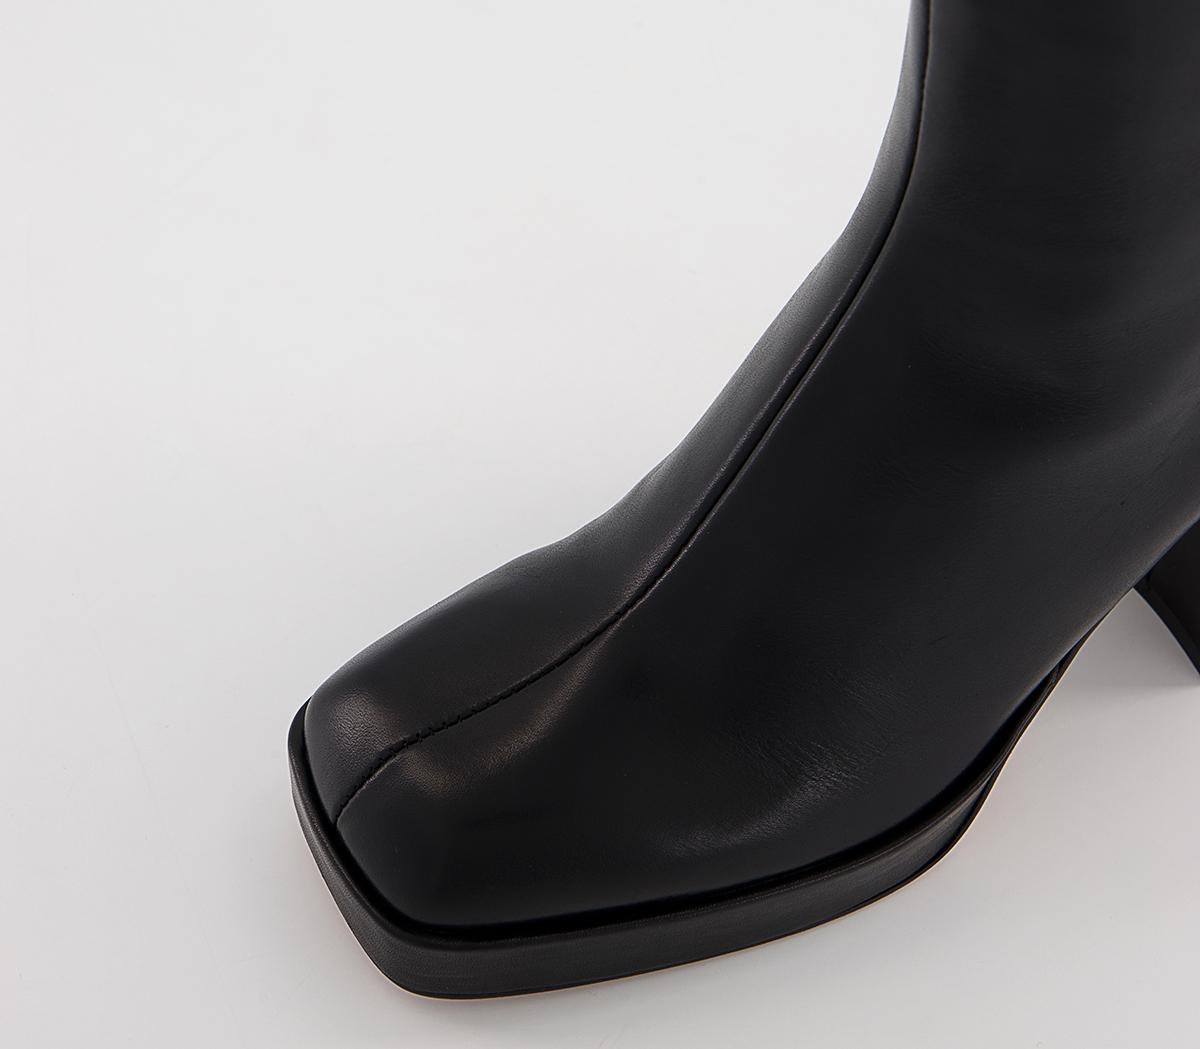 OFFICE Attitude Square Toe Platform Ankle Boots Black Leather - Women's ...